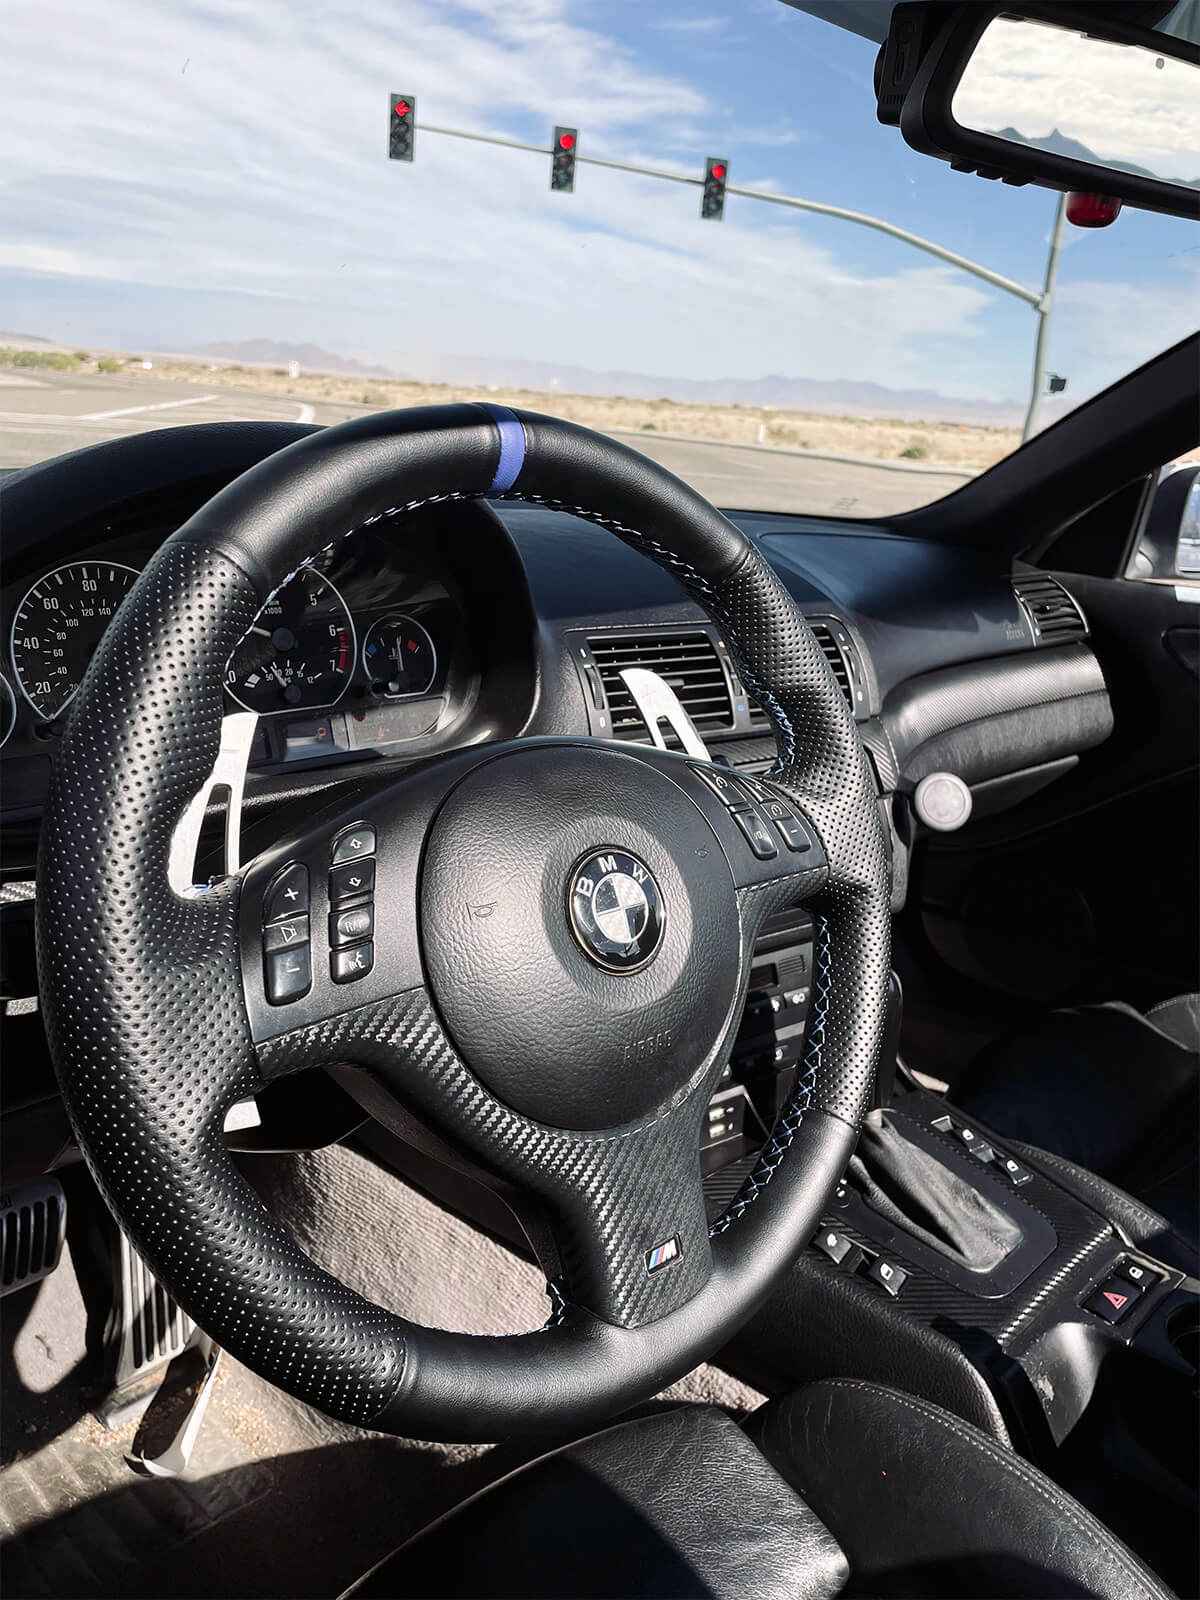 BMW E46 M3 steering wheel